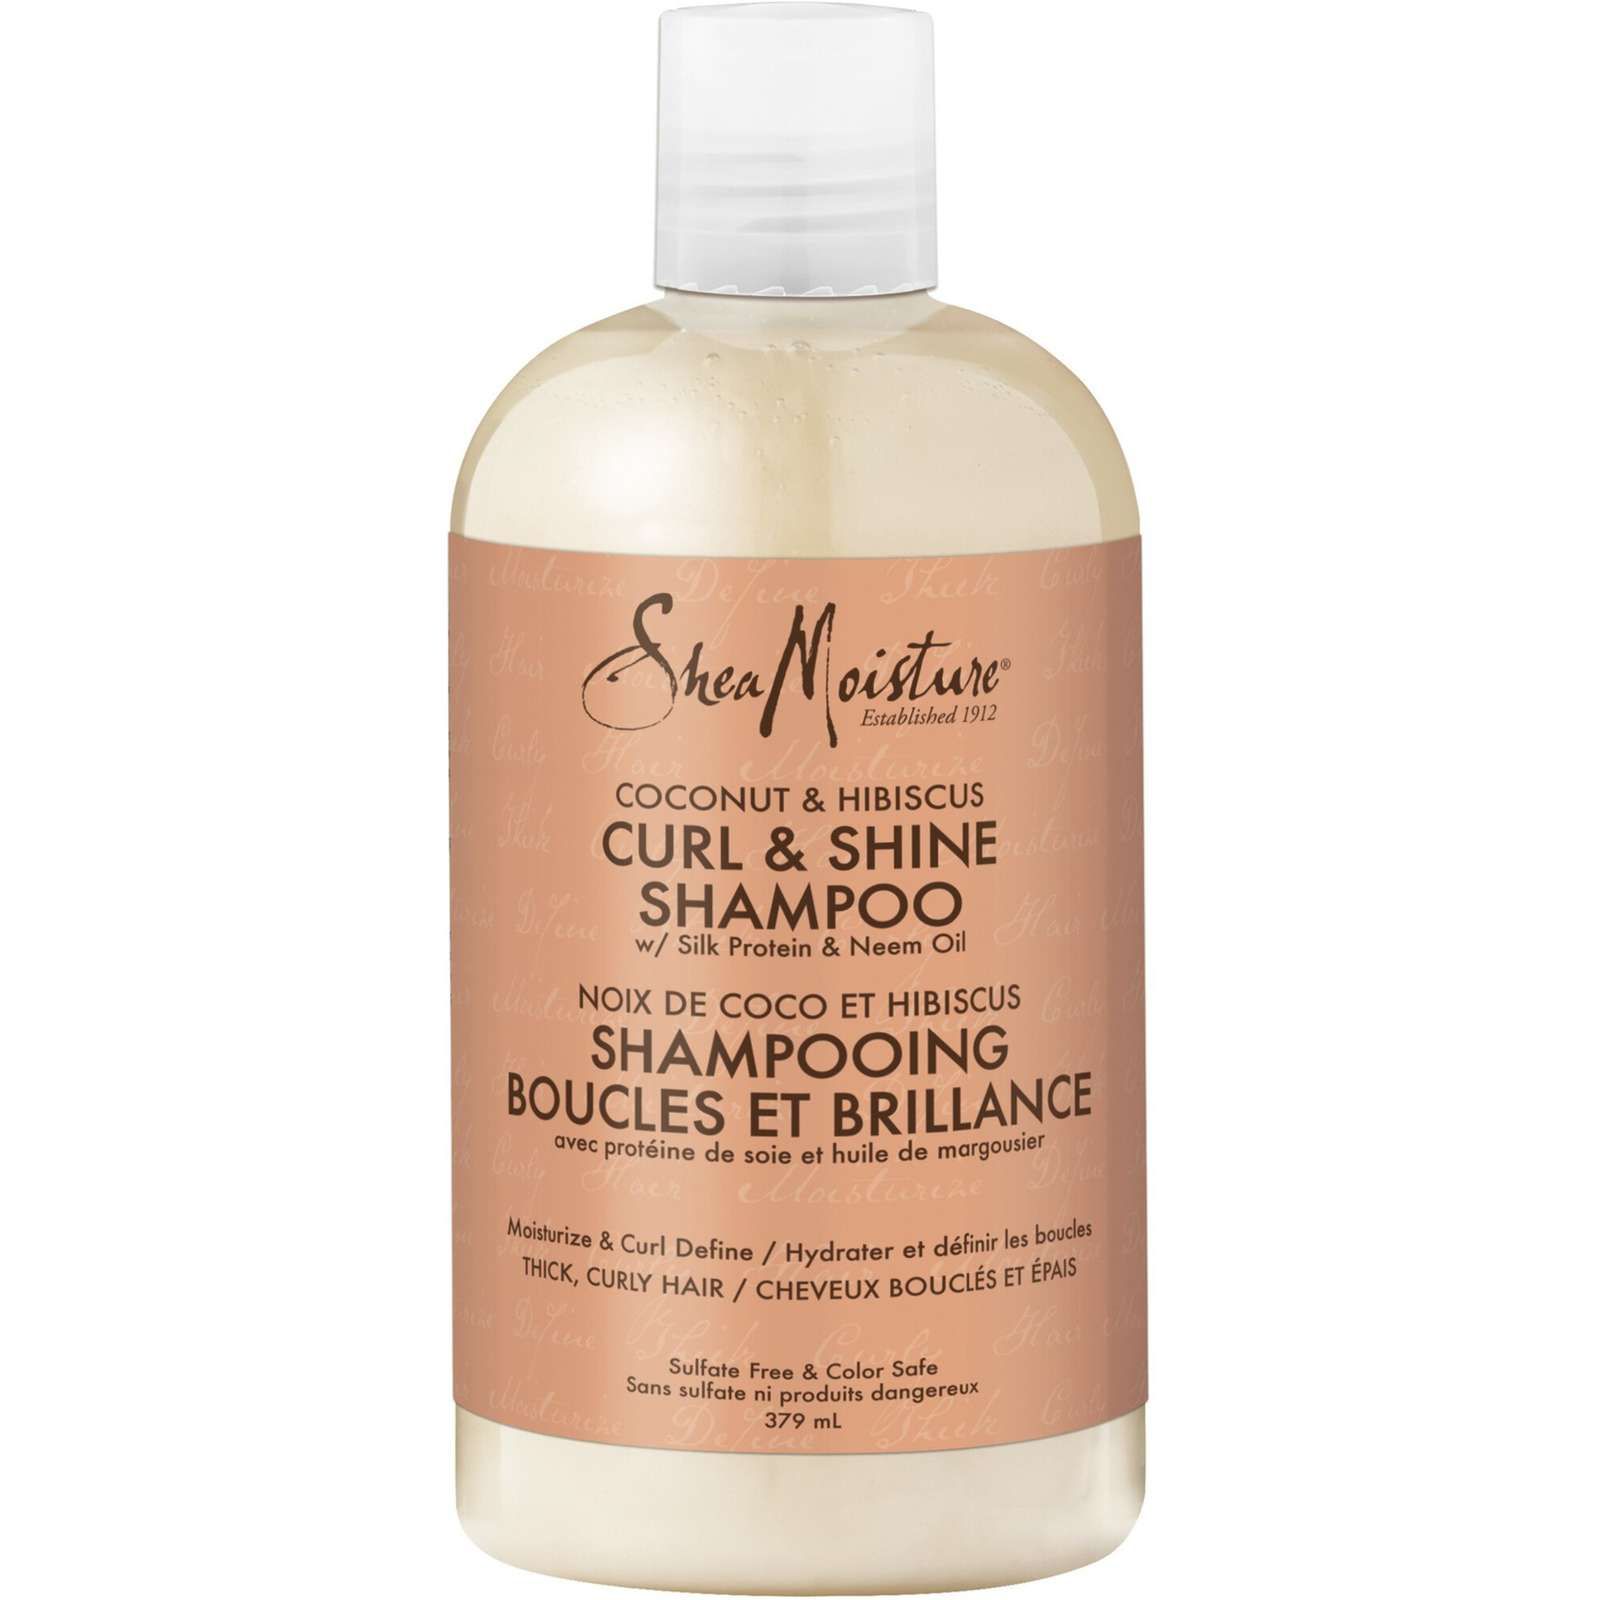 Coconut & Hibiscus Curl & Shine Shampoo | Shoppers Drug Mart – Beauty